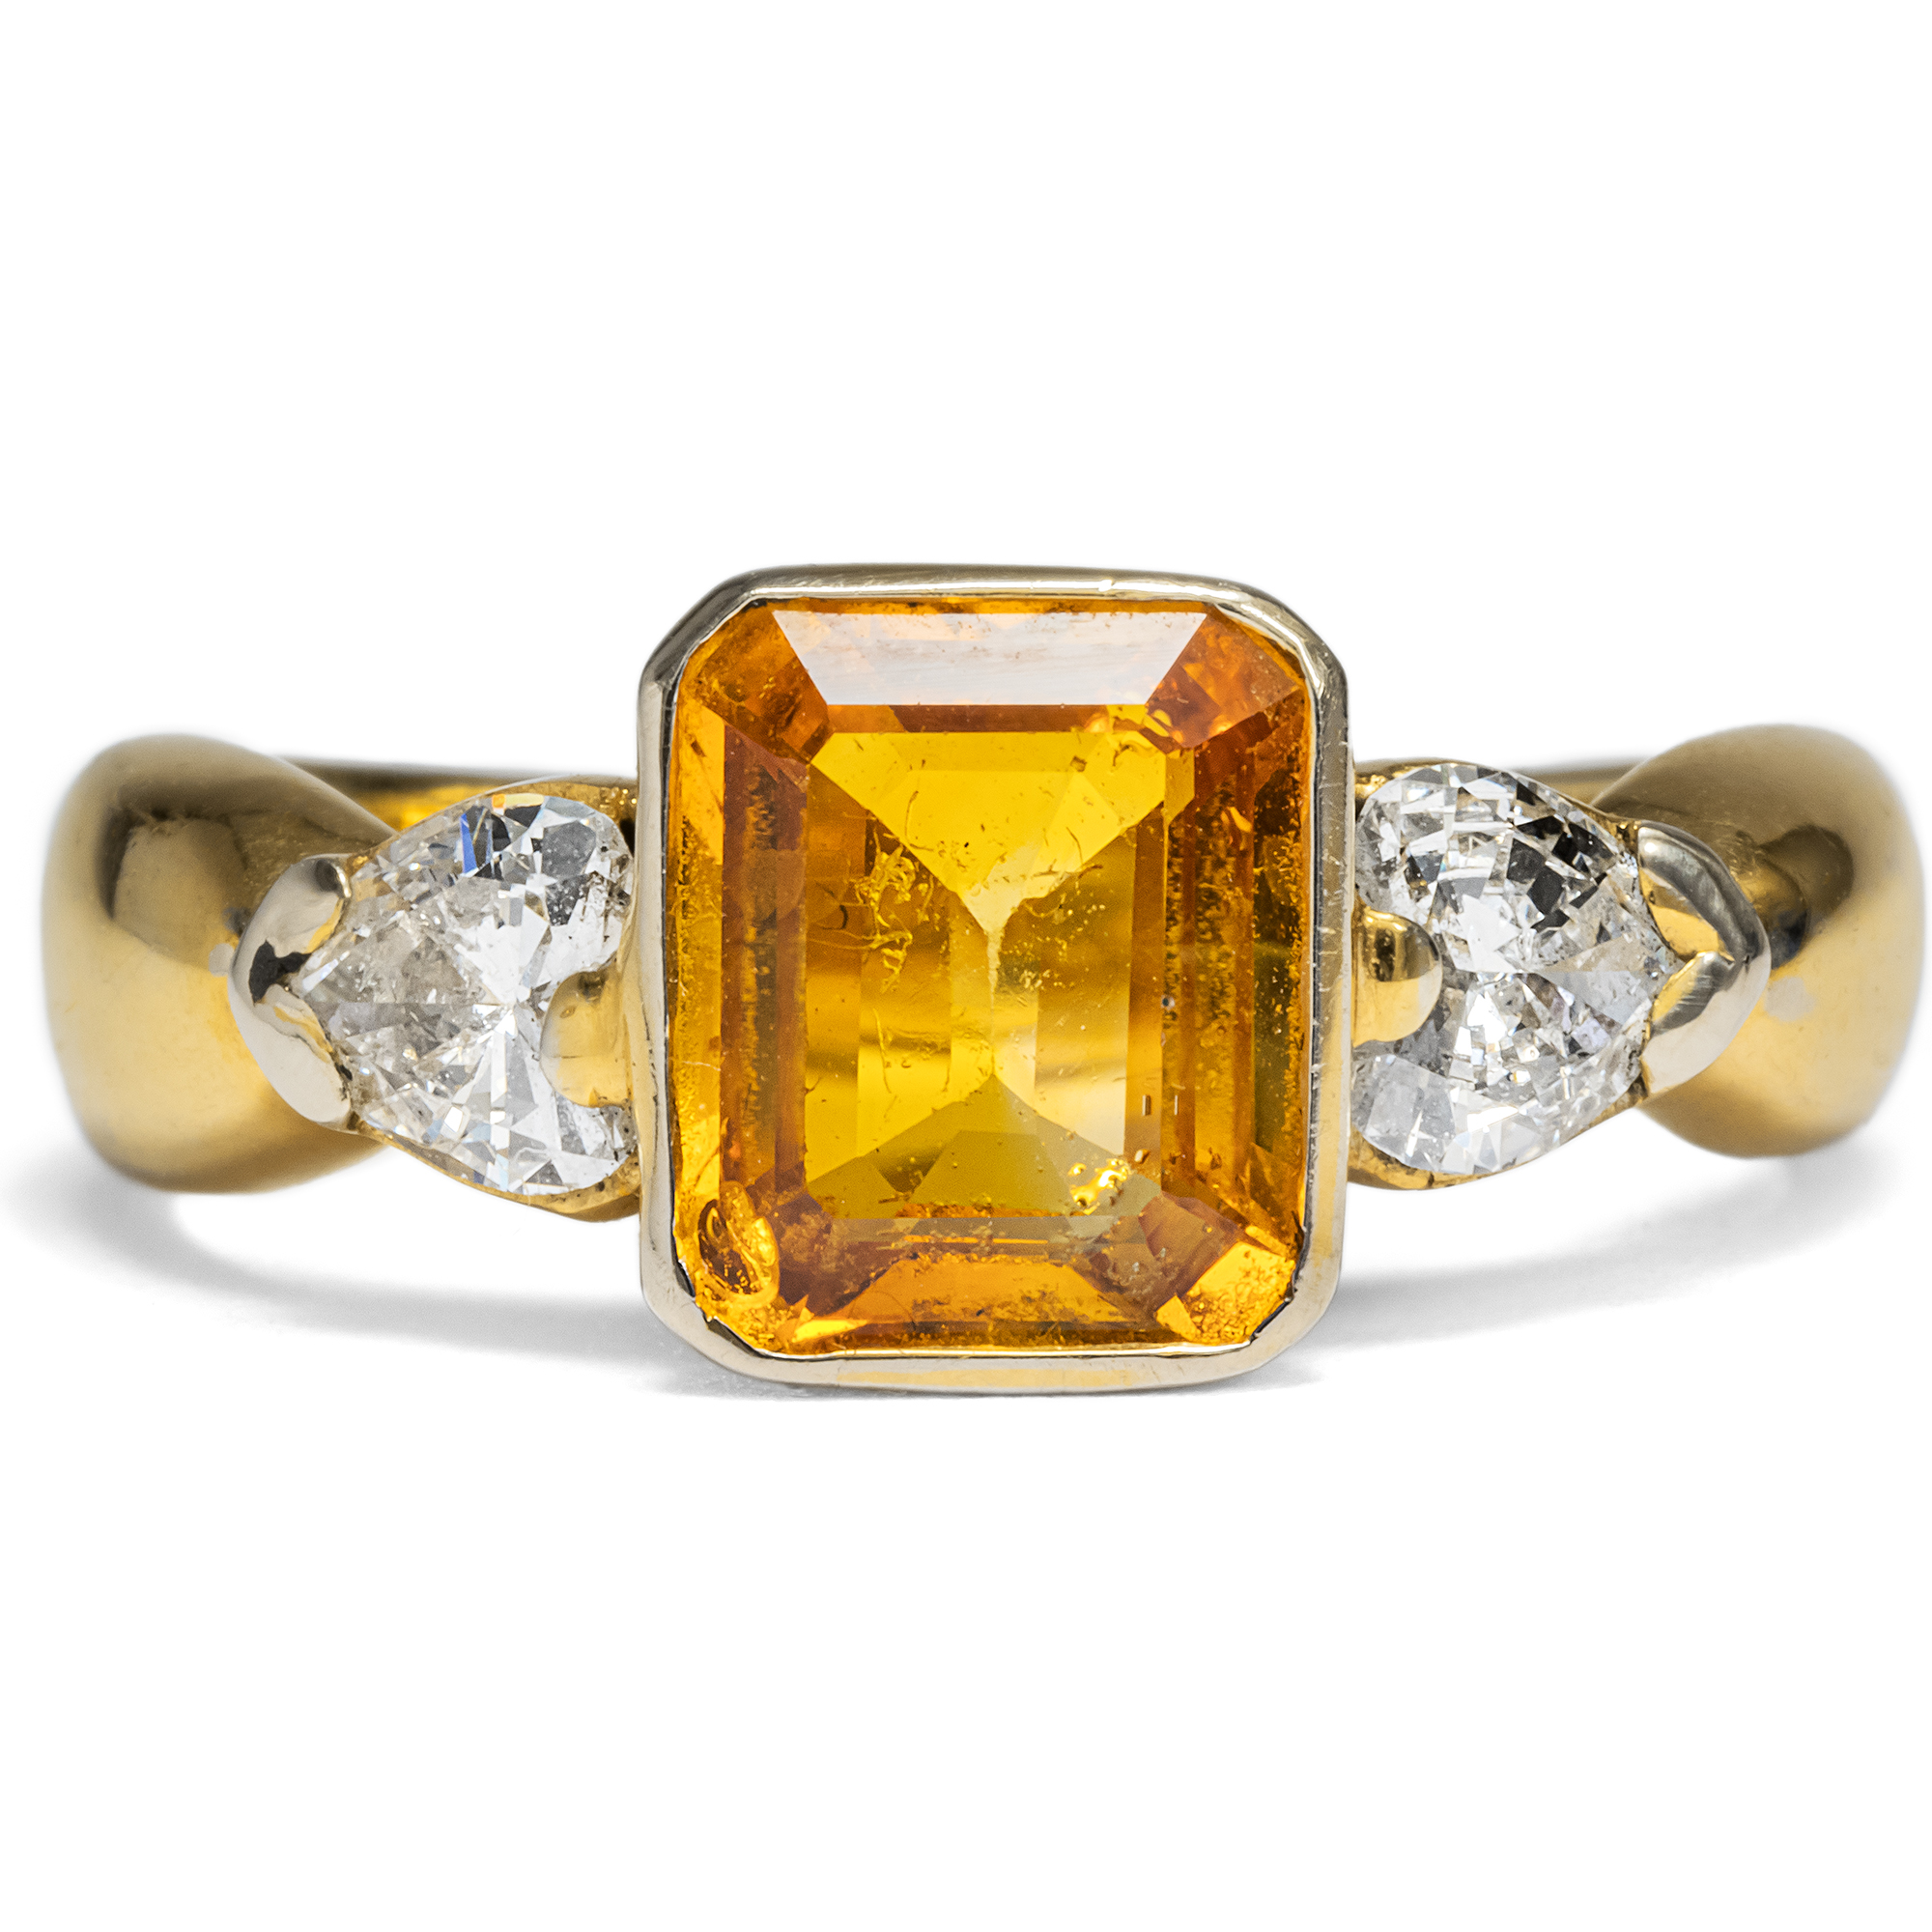 Vintage Ring mit orangem Saphir & Diamanten in Gold, Italien um 2010